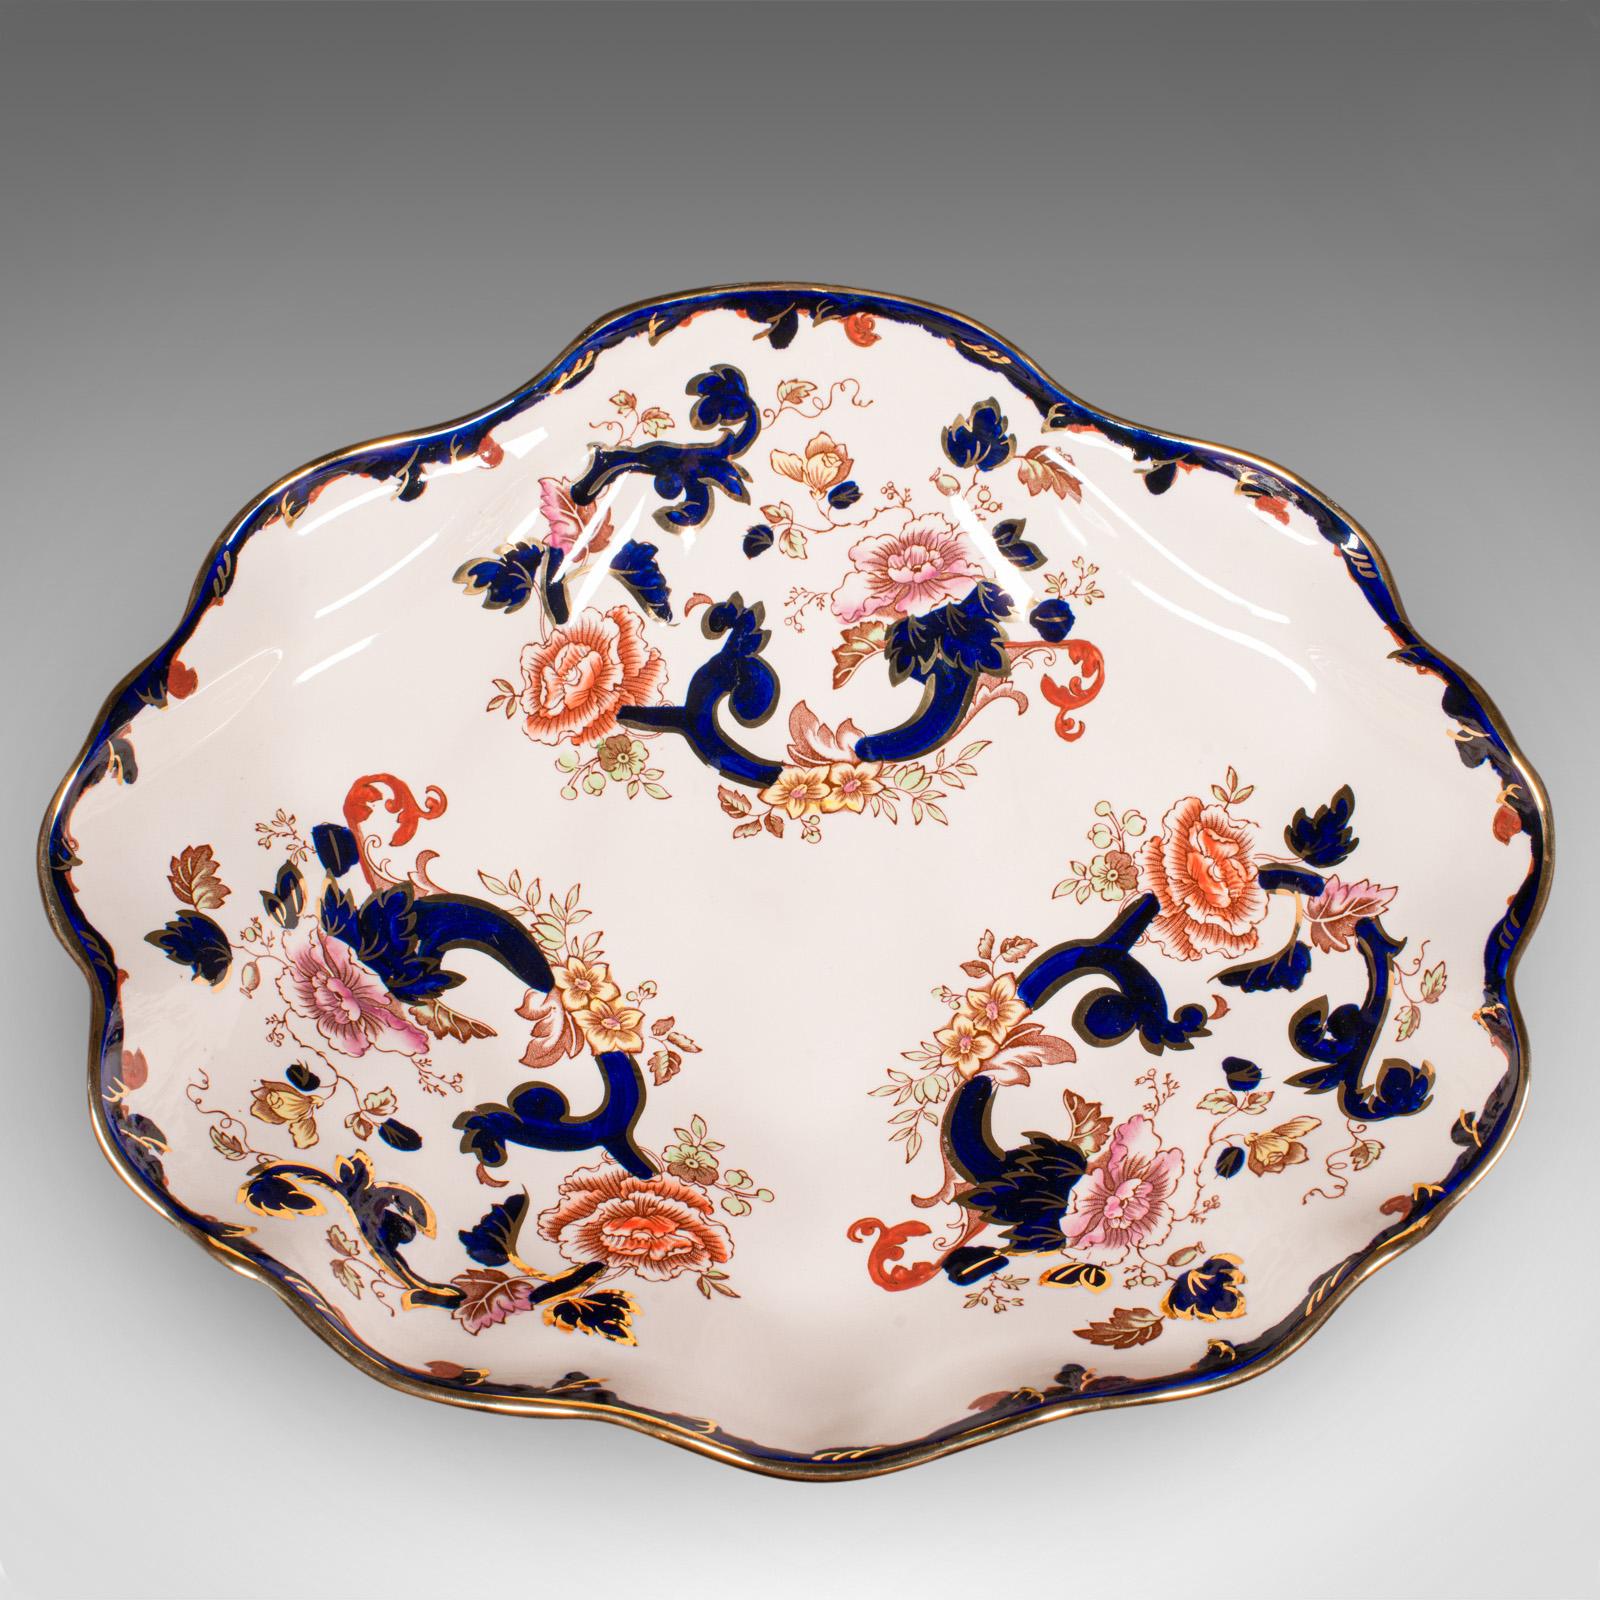 Large Vintage Shell Shaped Fruit Bowl, English Ceramic, Decorative, Serving Dish For Sale 4